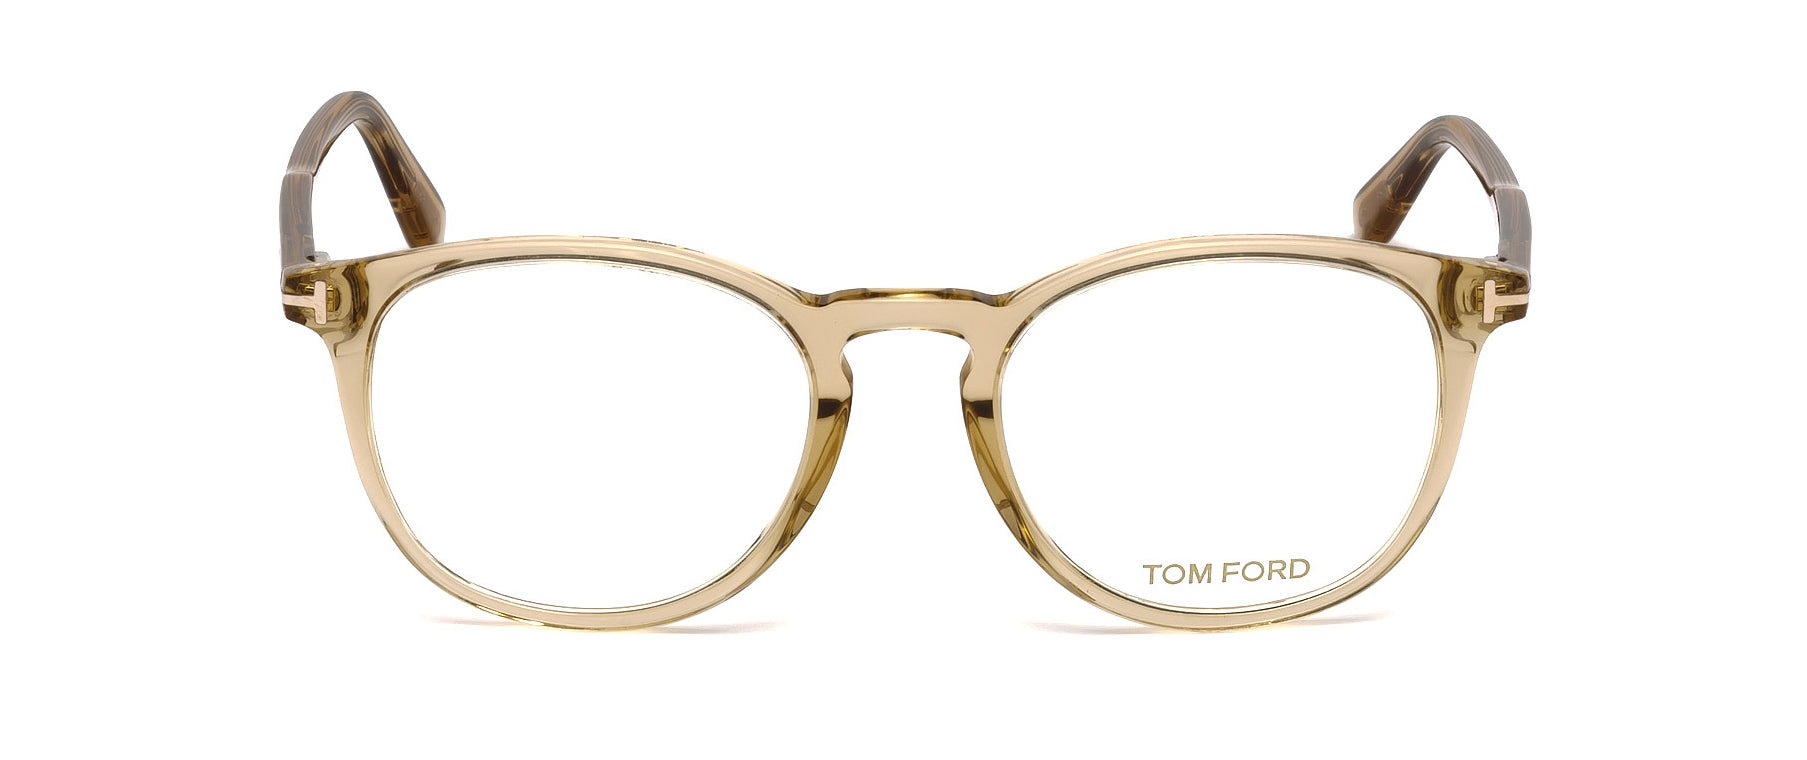 Tom Ford TF5401 Glasses Fashion Eyewear